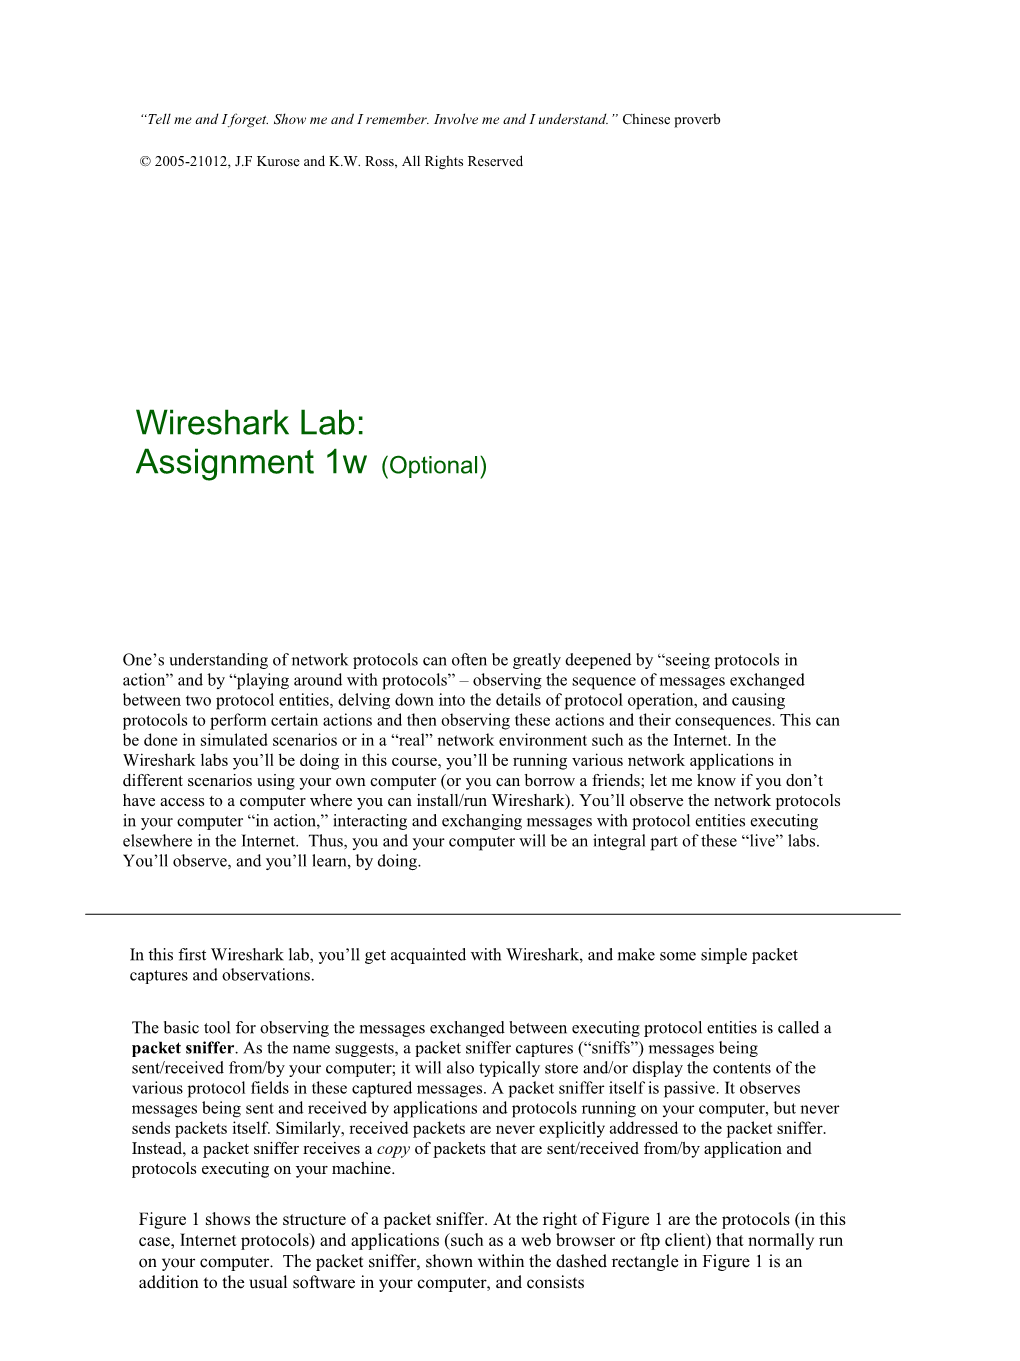 Wireshark Lab: Assignment 1W (Optional)